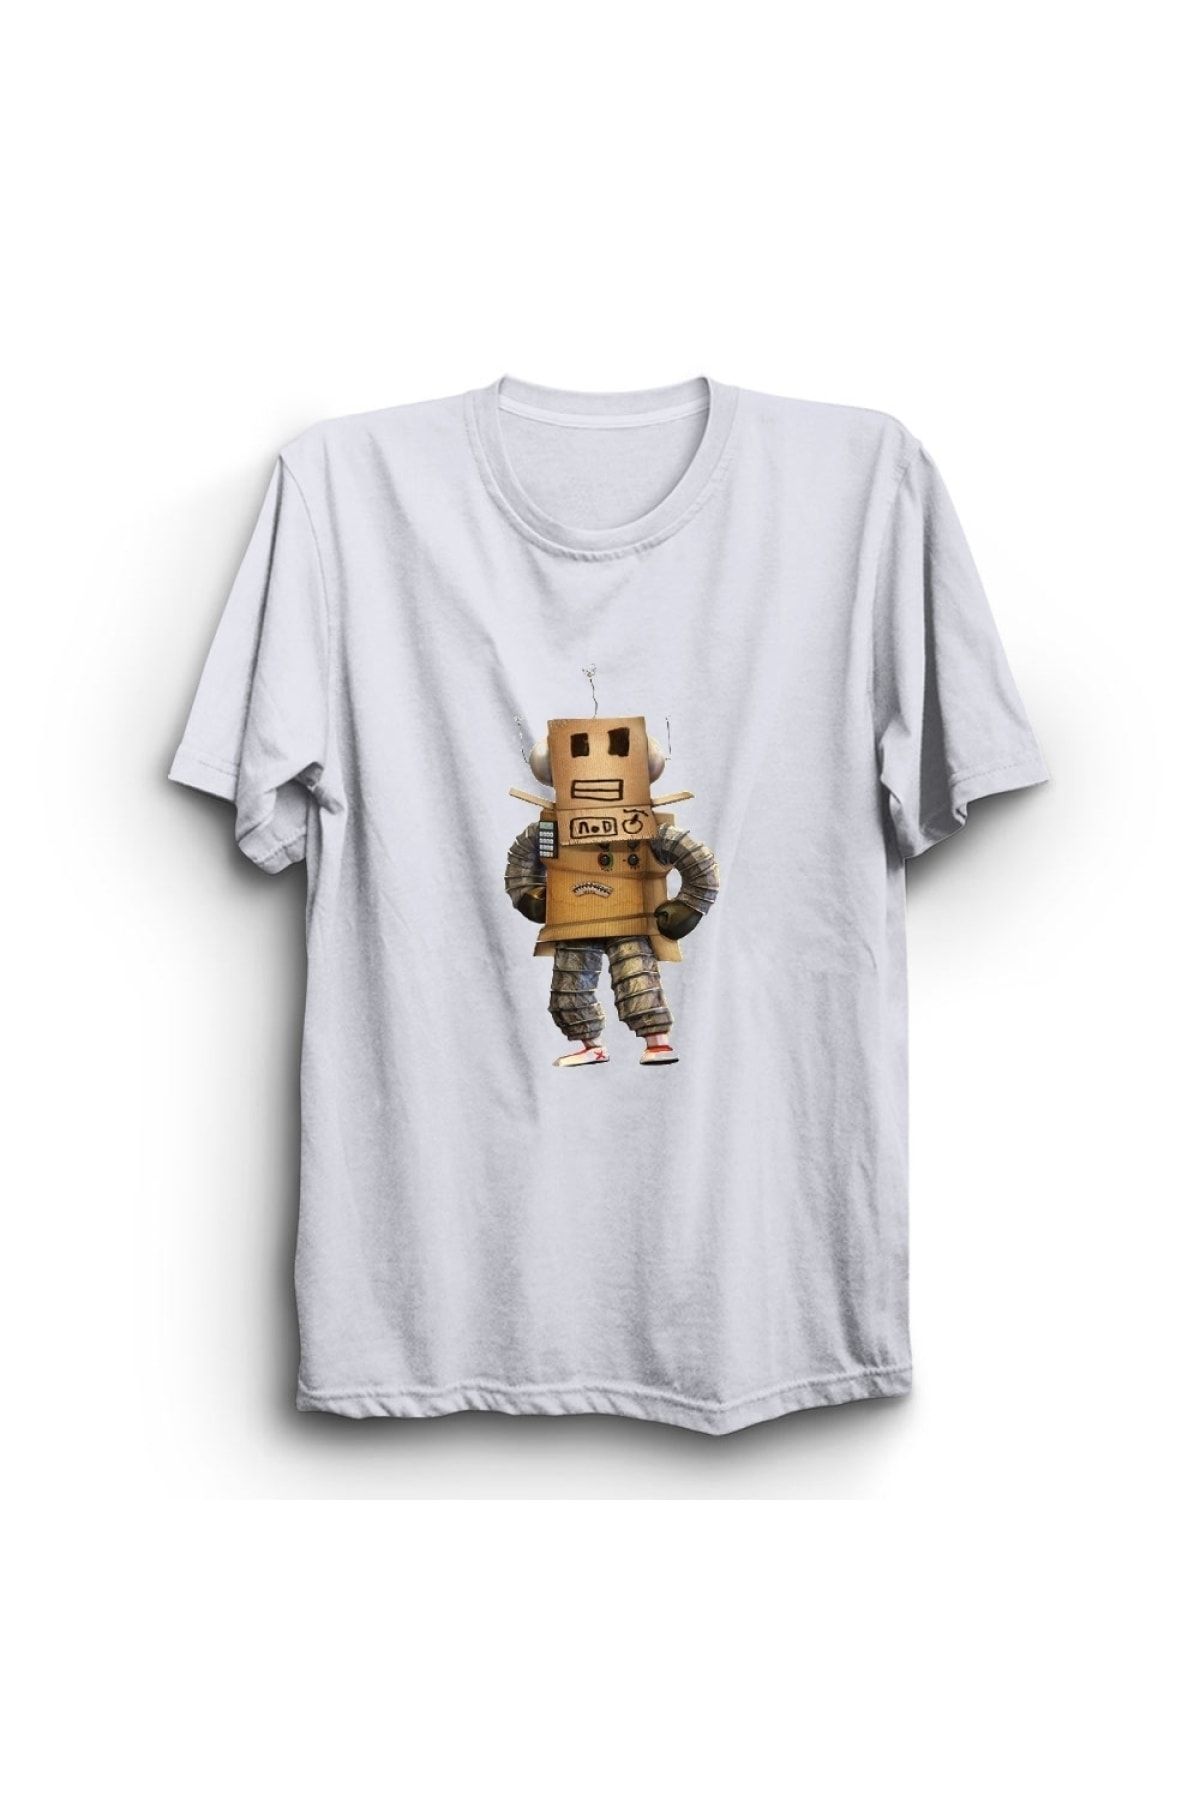 The Fame Roblox Robot Oyun Game Tişört